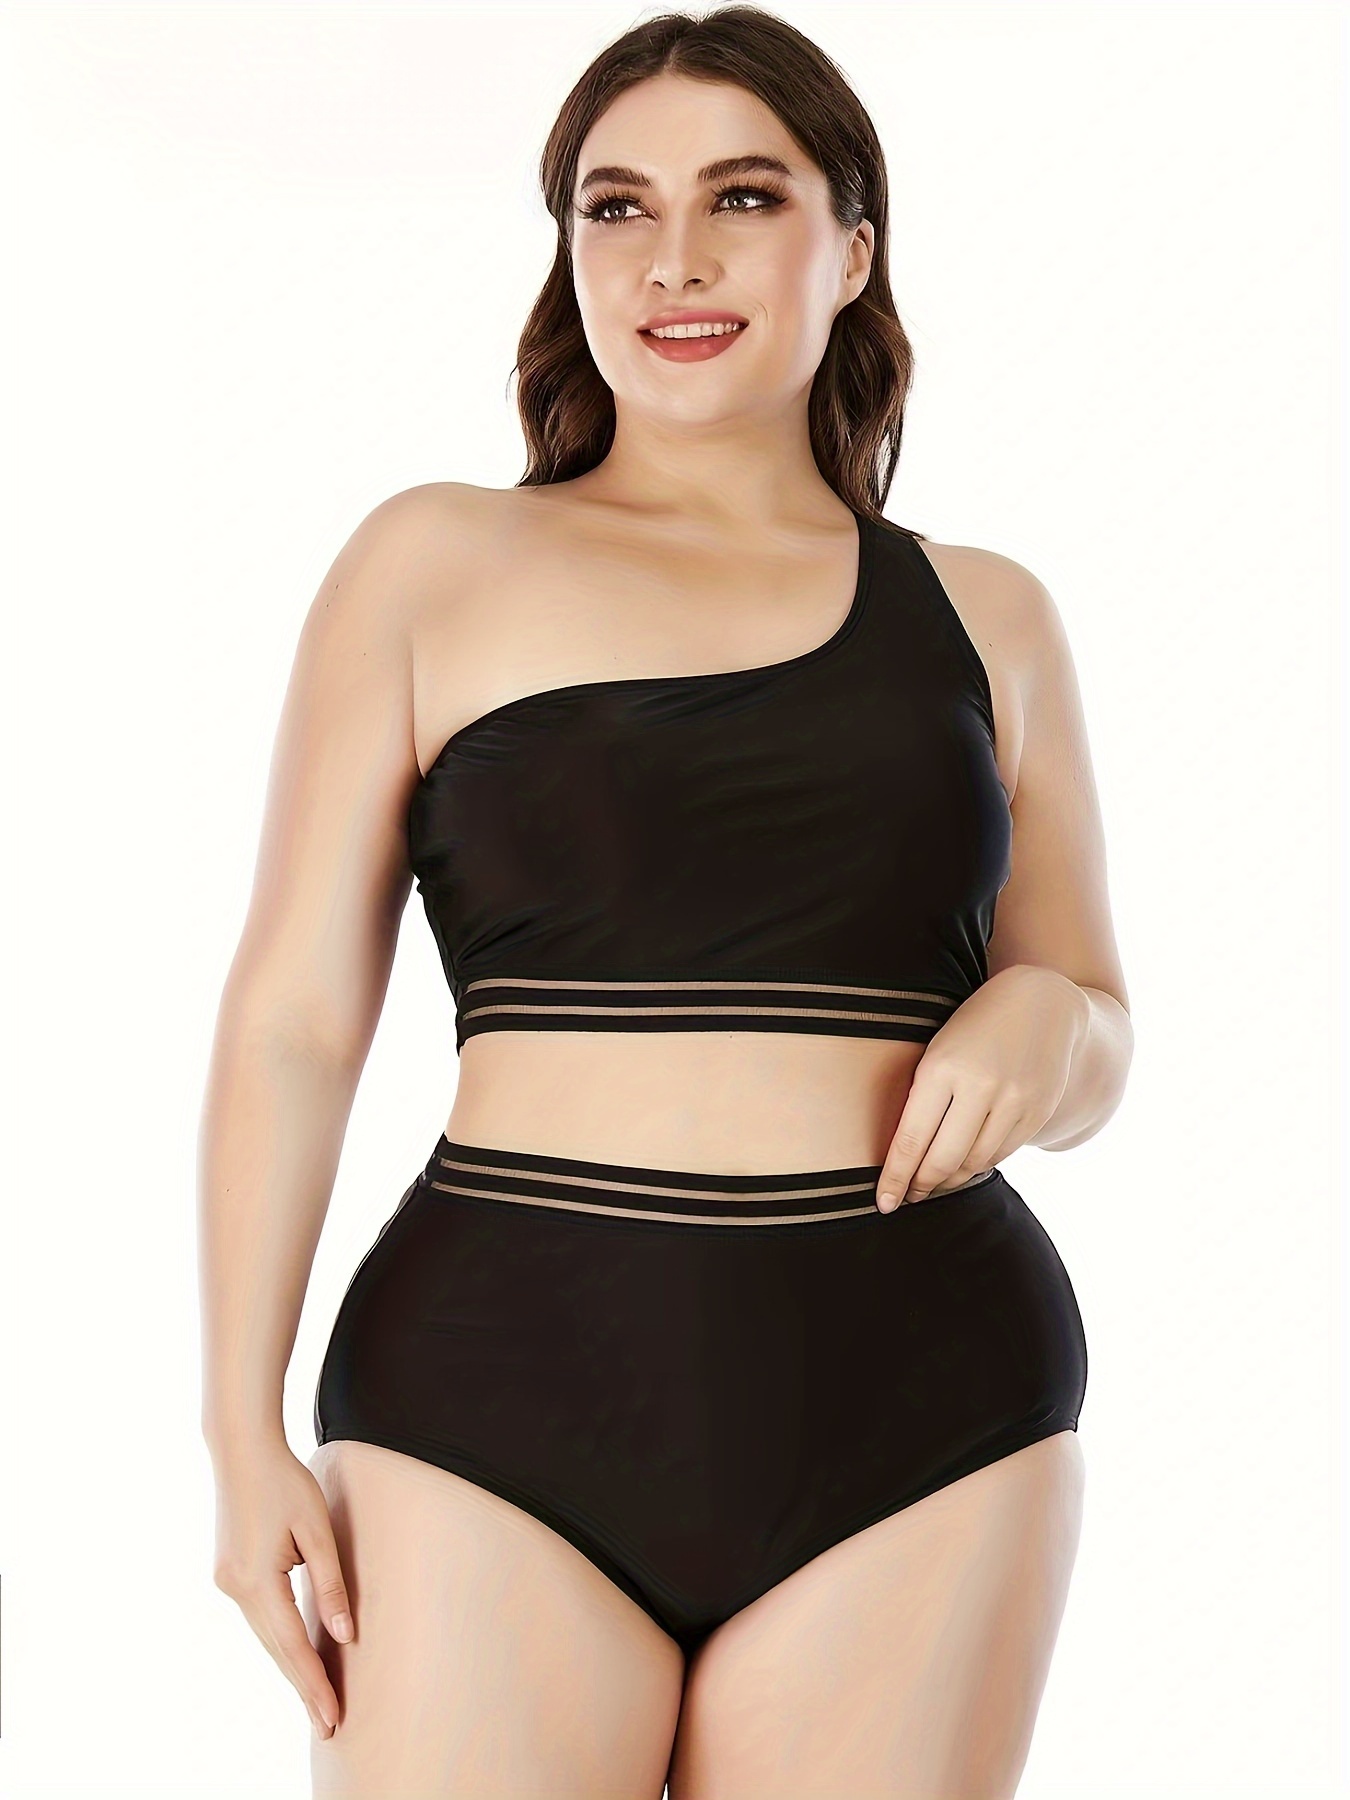 Sexy Striped Plus Size Swimwear With Built in Bra - BCD20031C / L